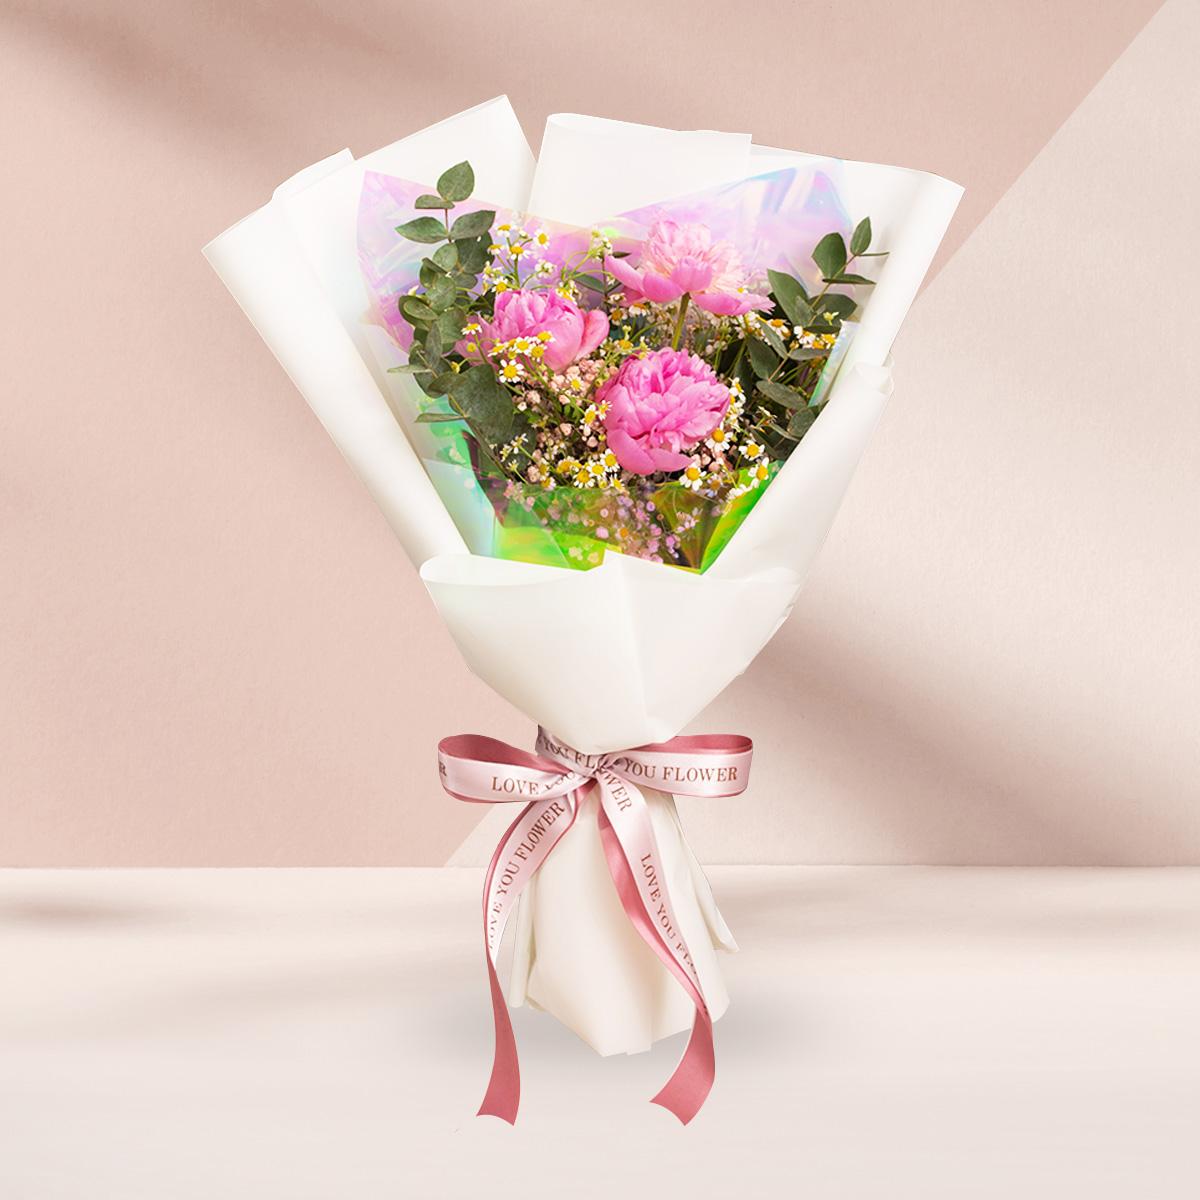 Queena's love ช่อดอกไม้พีโอนีสีชมพู 3 ดอก  แซมด้วย ยูคาลิตัสใบรี ดอกเดซี่ และยิปโซบรัสสีชมพูอ่อน ห่อด้วยกระดาษสีขาว